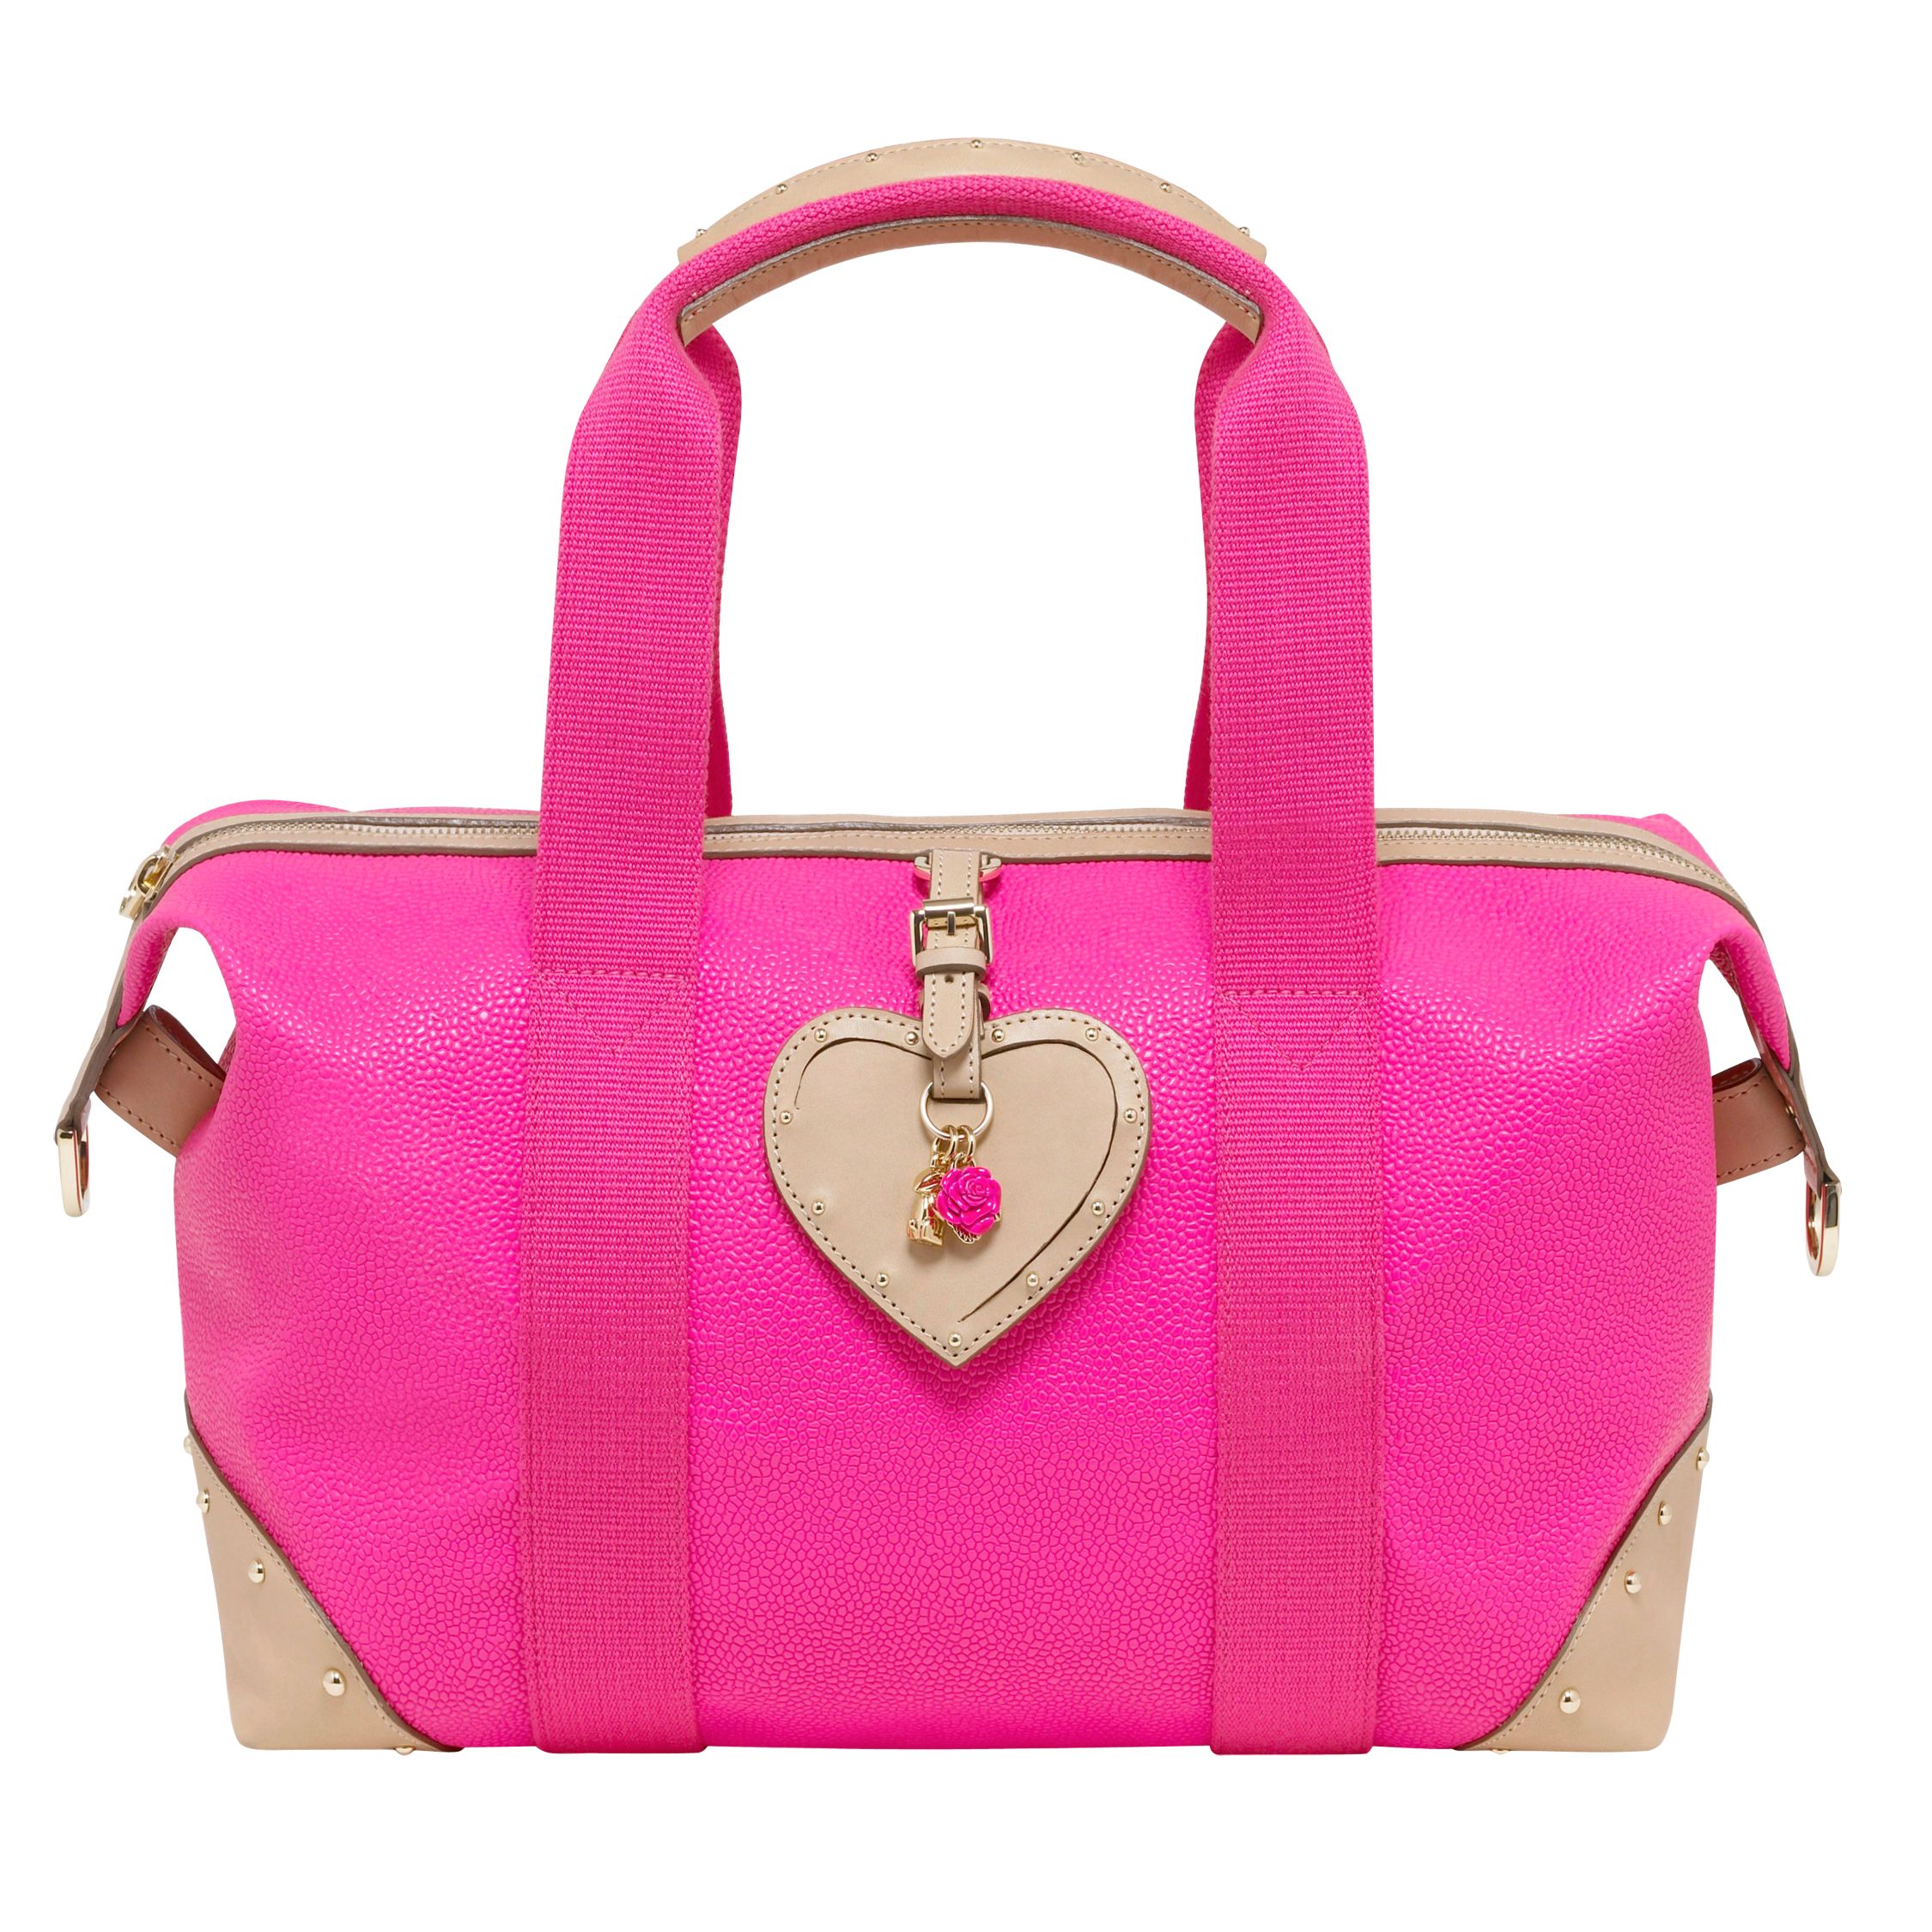 Mulberry Jessie Clipper Grab Handbag, Hot pink at John Lewis